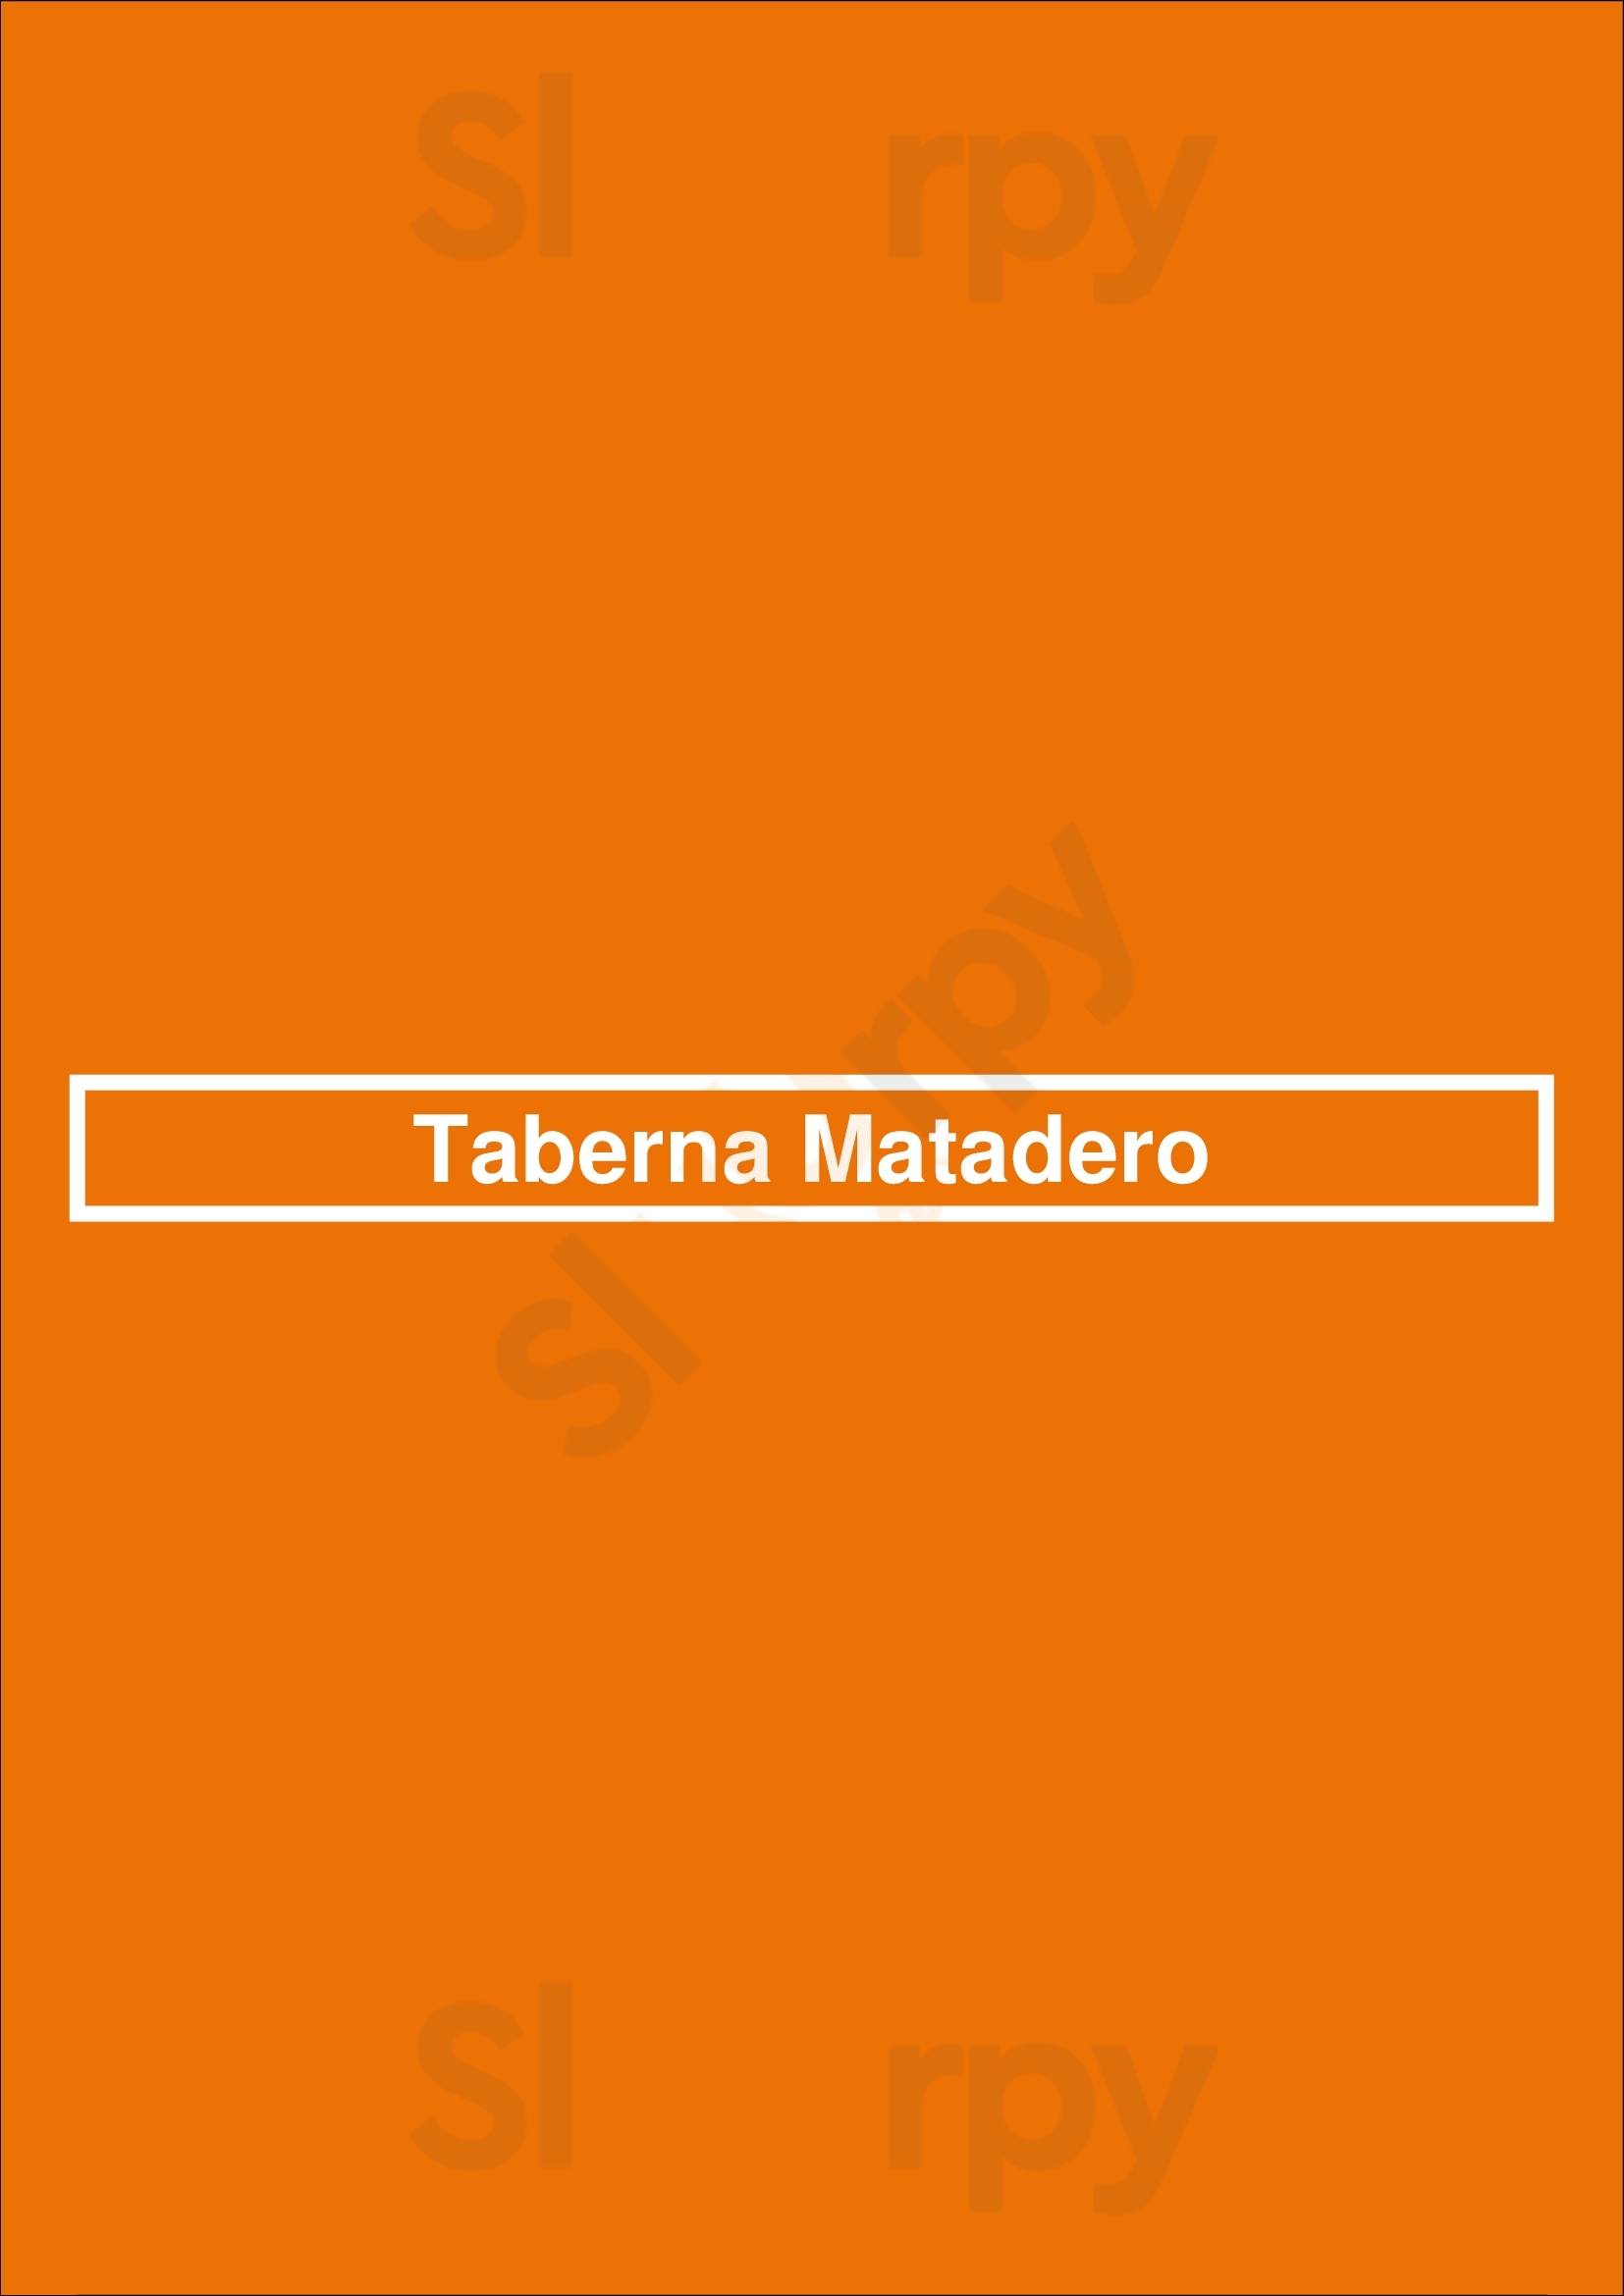 Taberna Matadero Sevilla Menu - 1